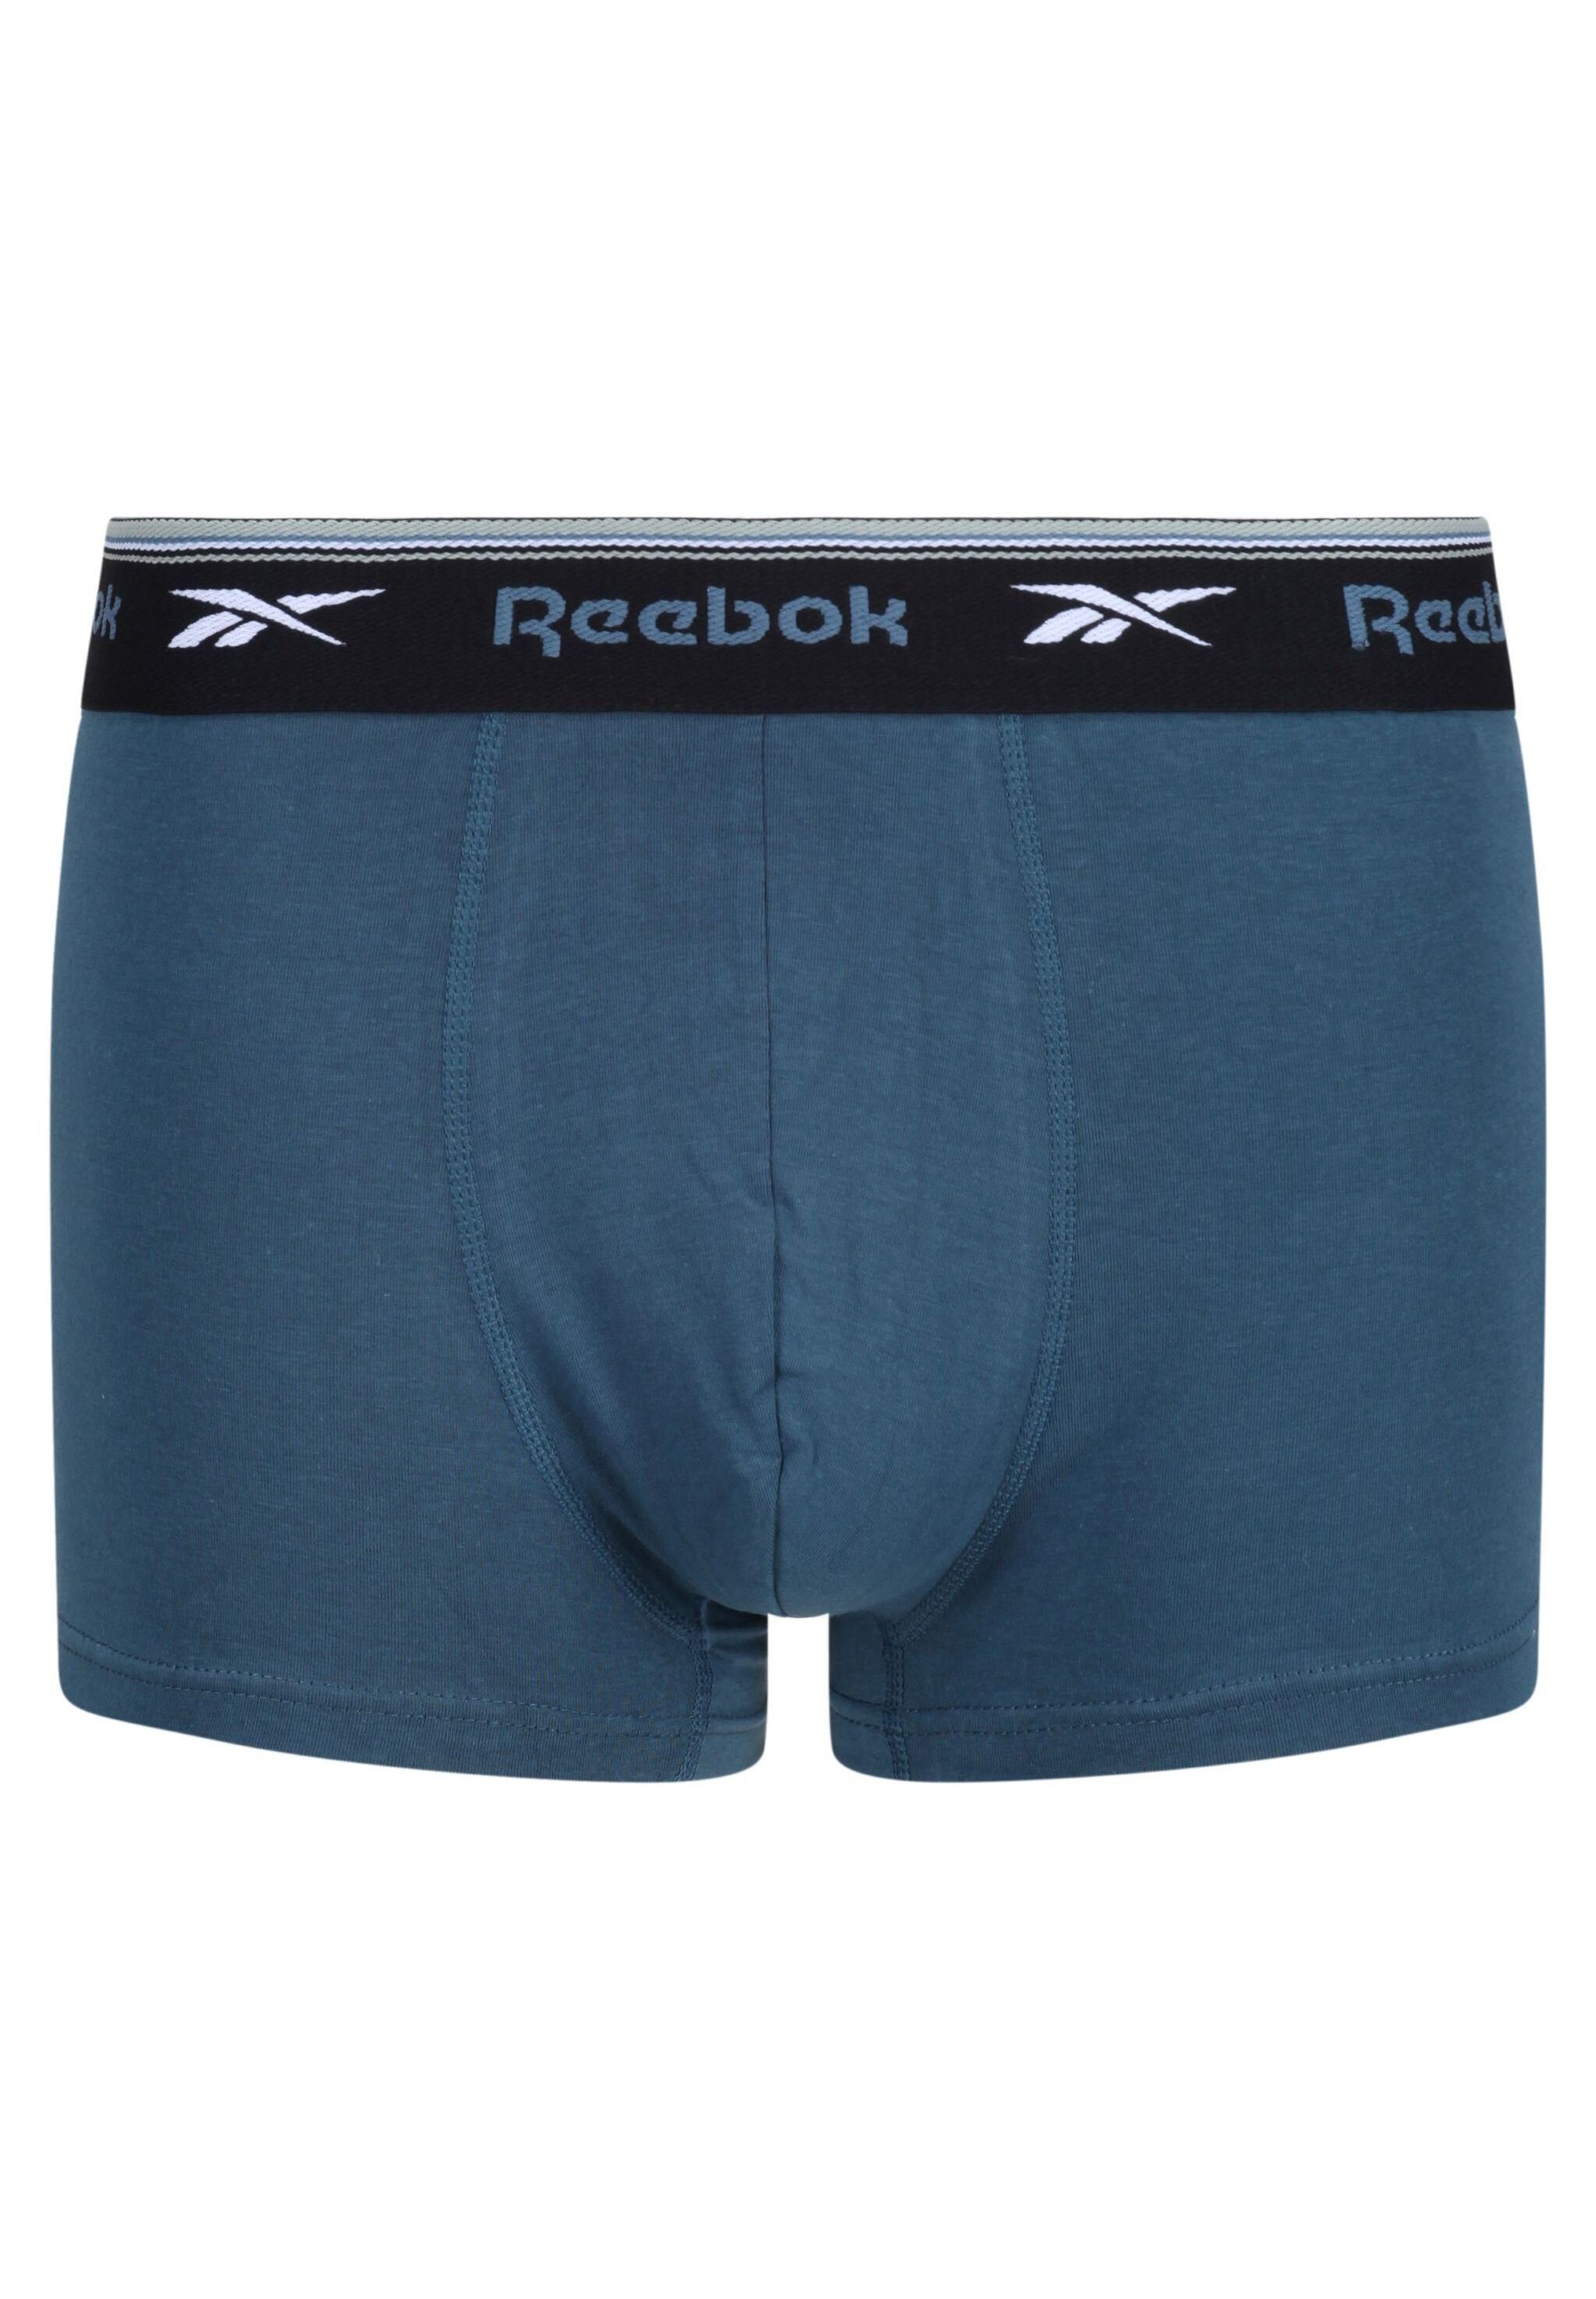 Sport VectorRed/White/Blu Boxershorts 3-Pack Trunks Reebok (5-St)